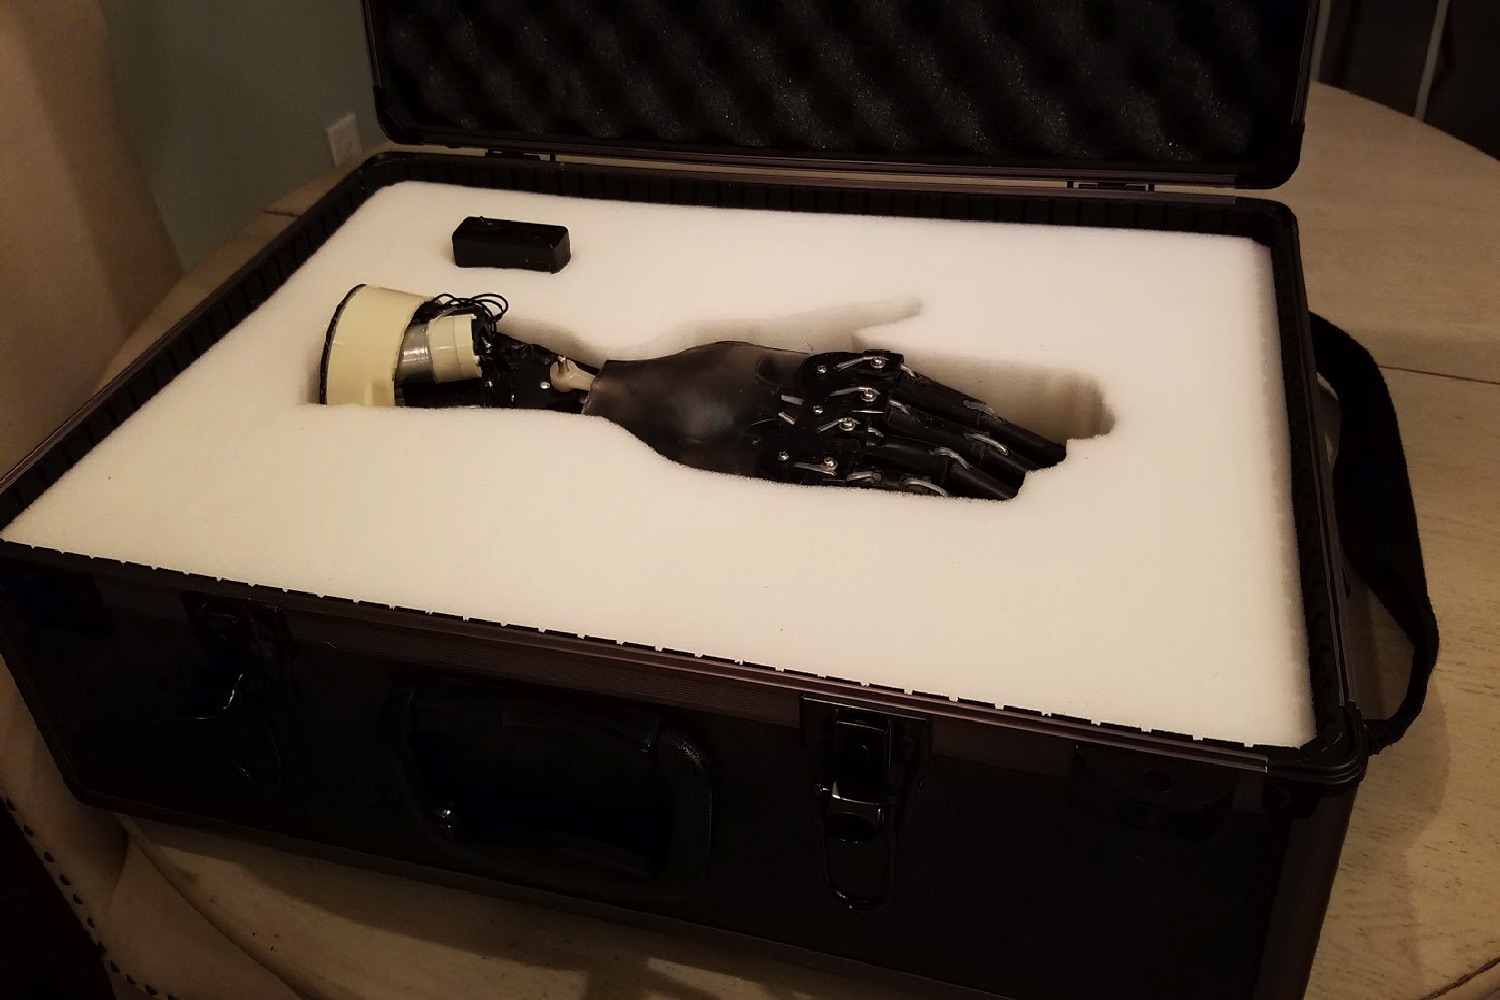 coffee maker bionic hand case